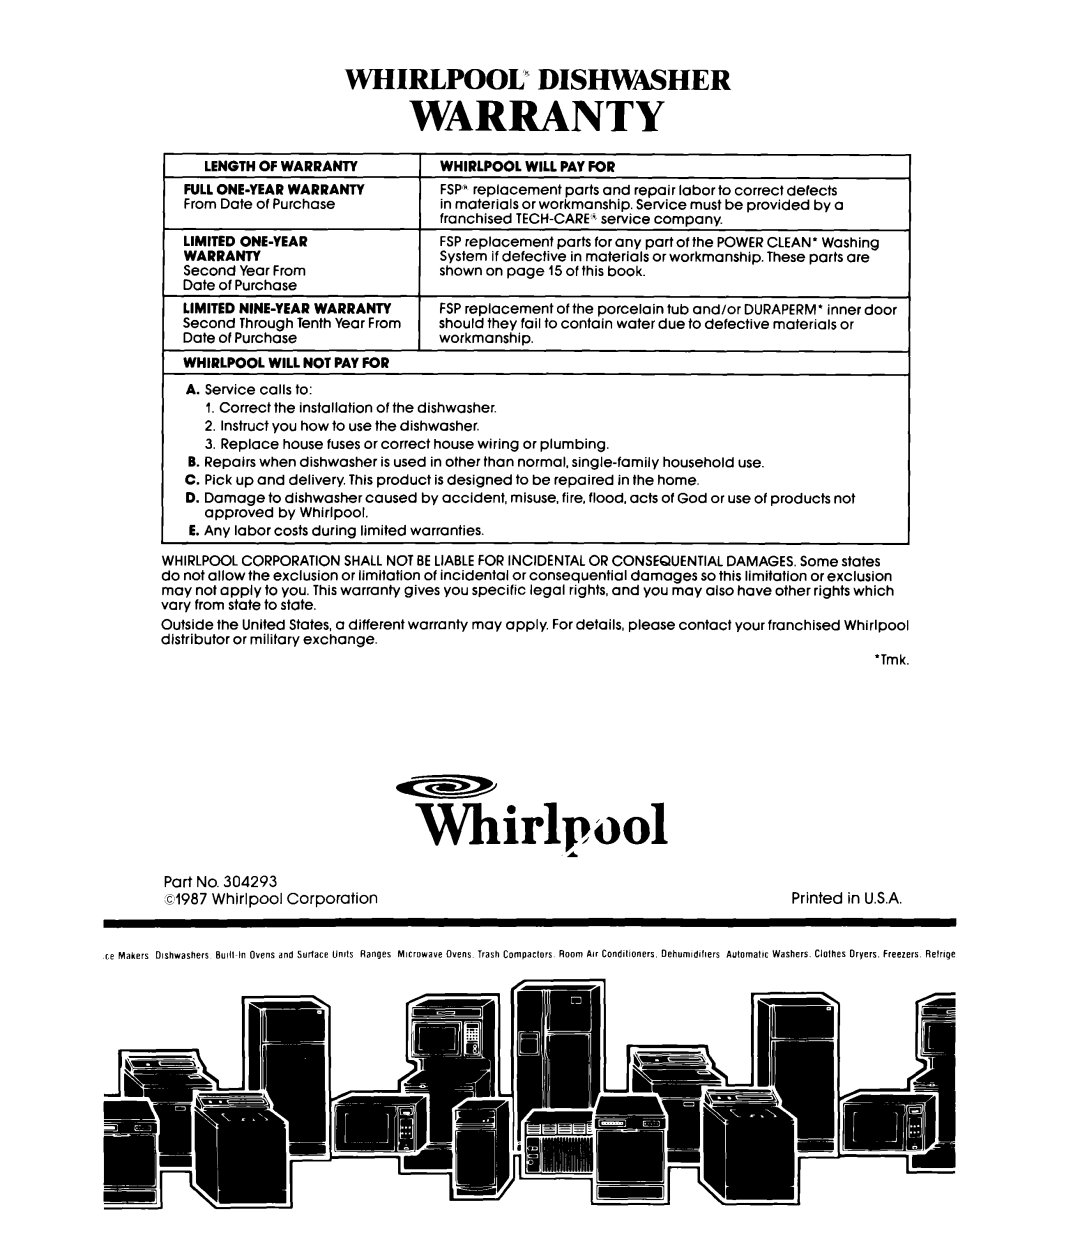 Whirlpool DU7600XS manual Whirlpooi ”, Diswmher, Whirlp001, Warranty 